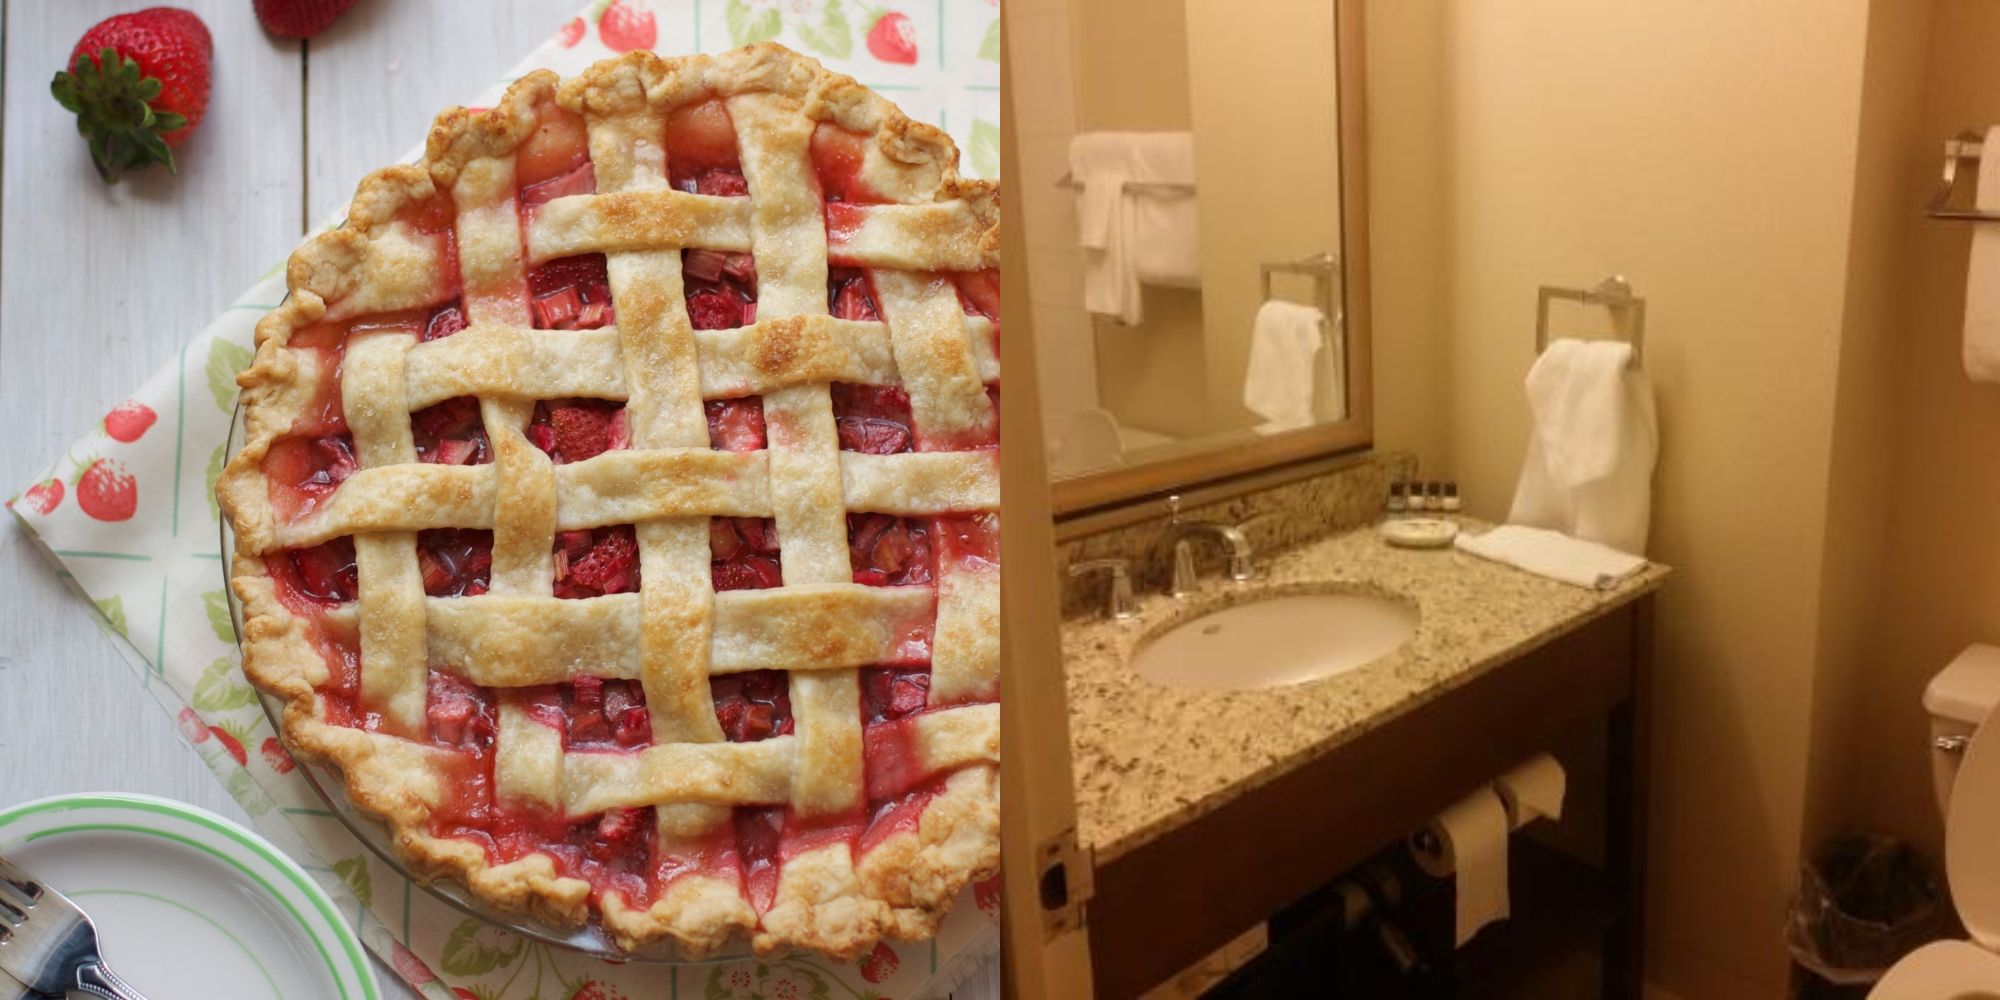 cherry pie and hotel bathroom